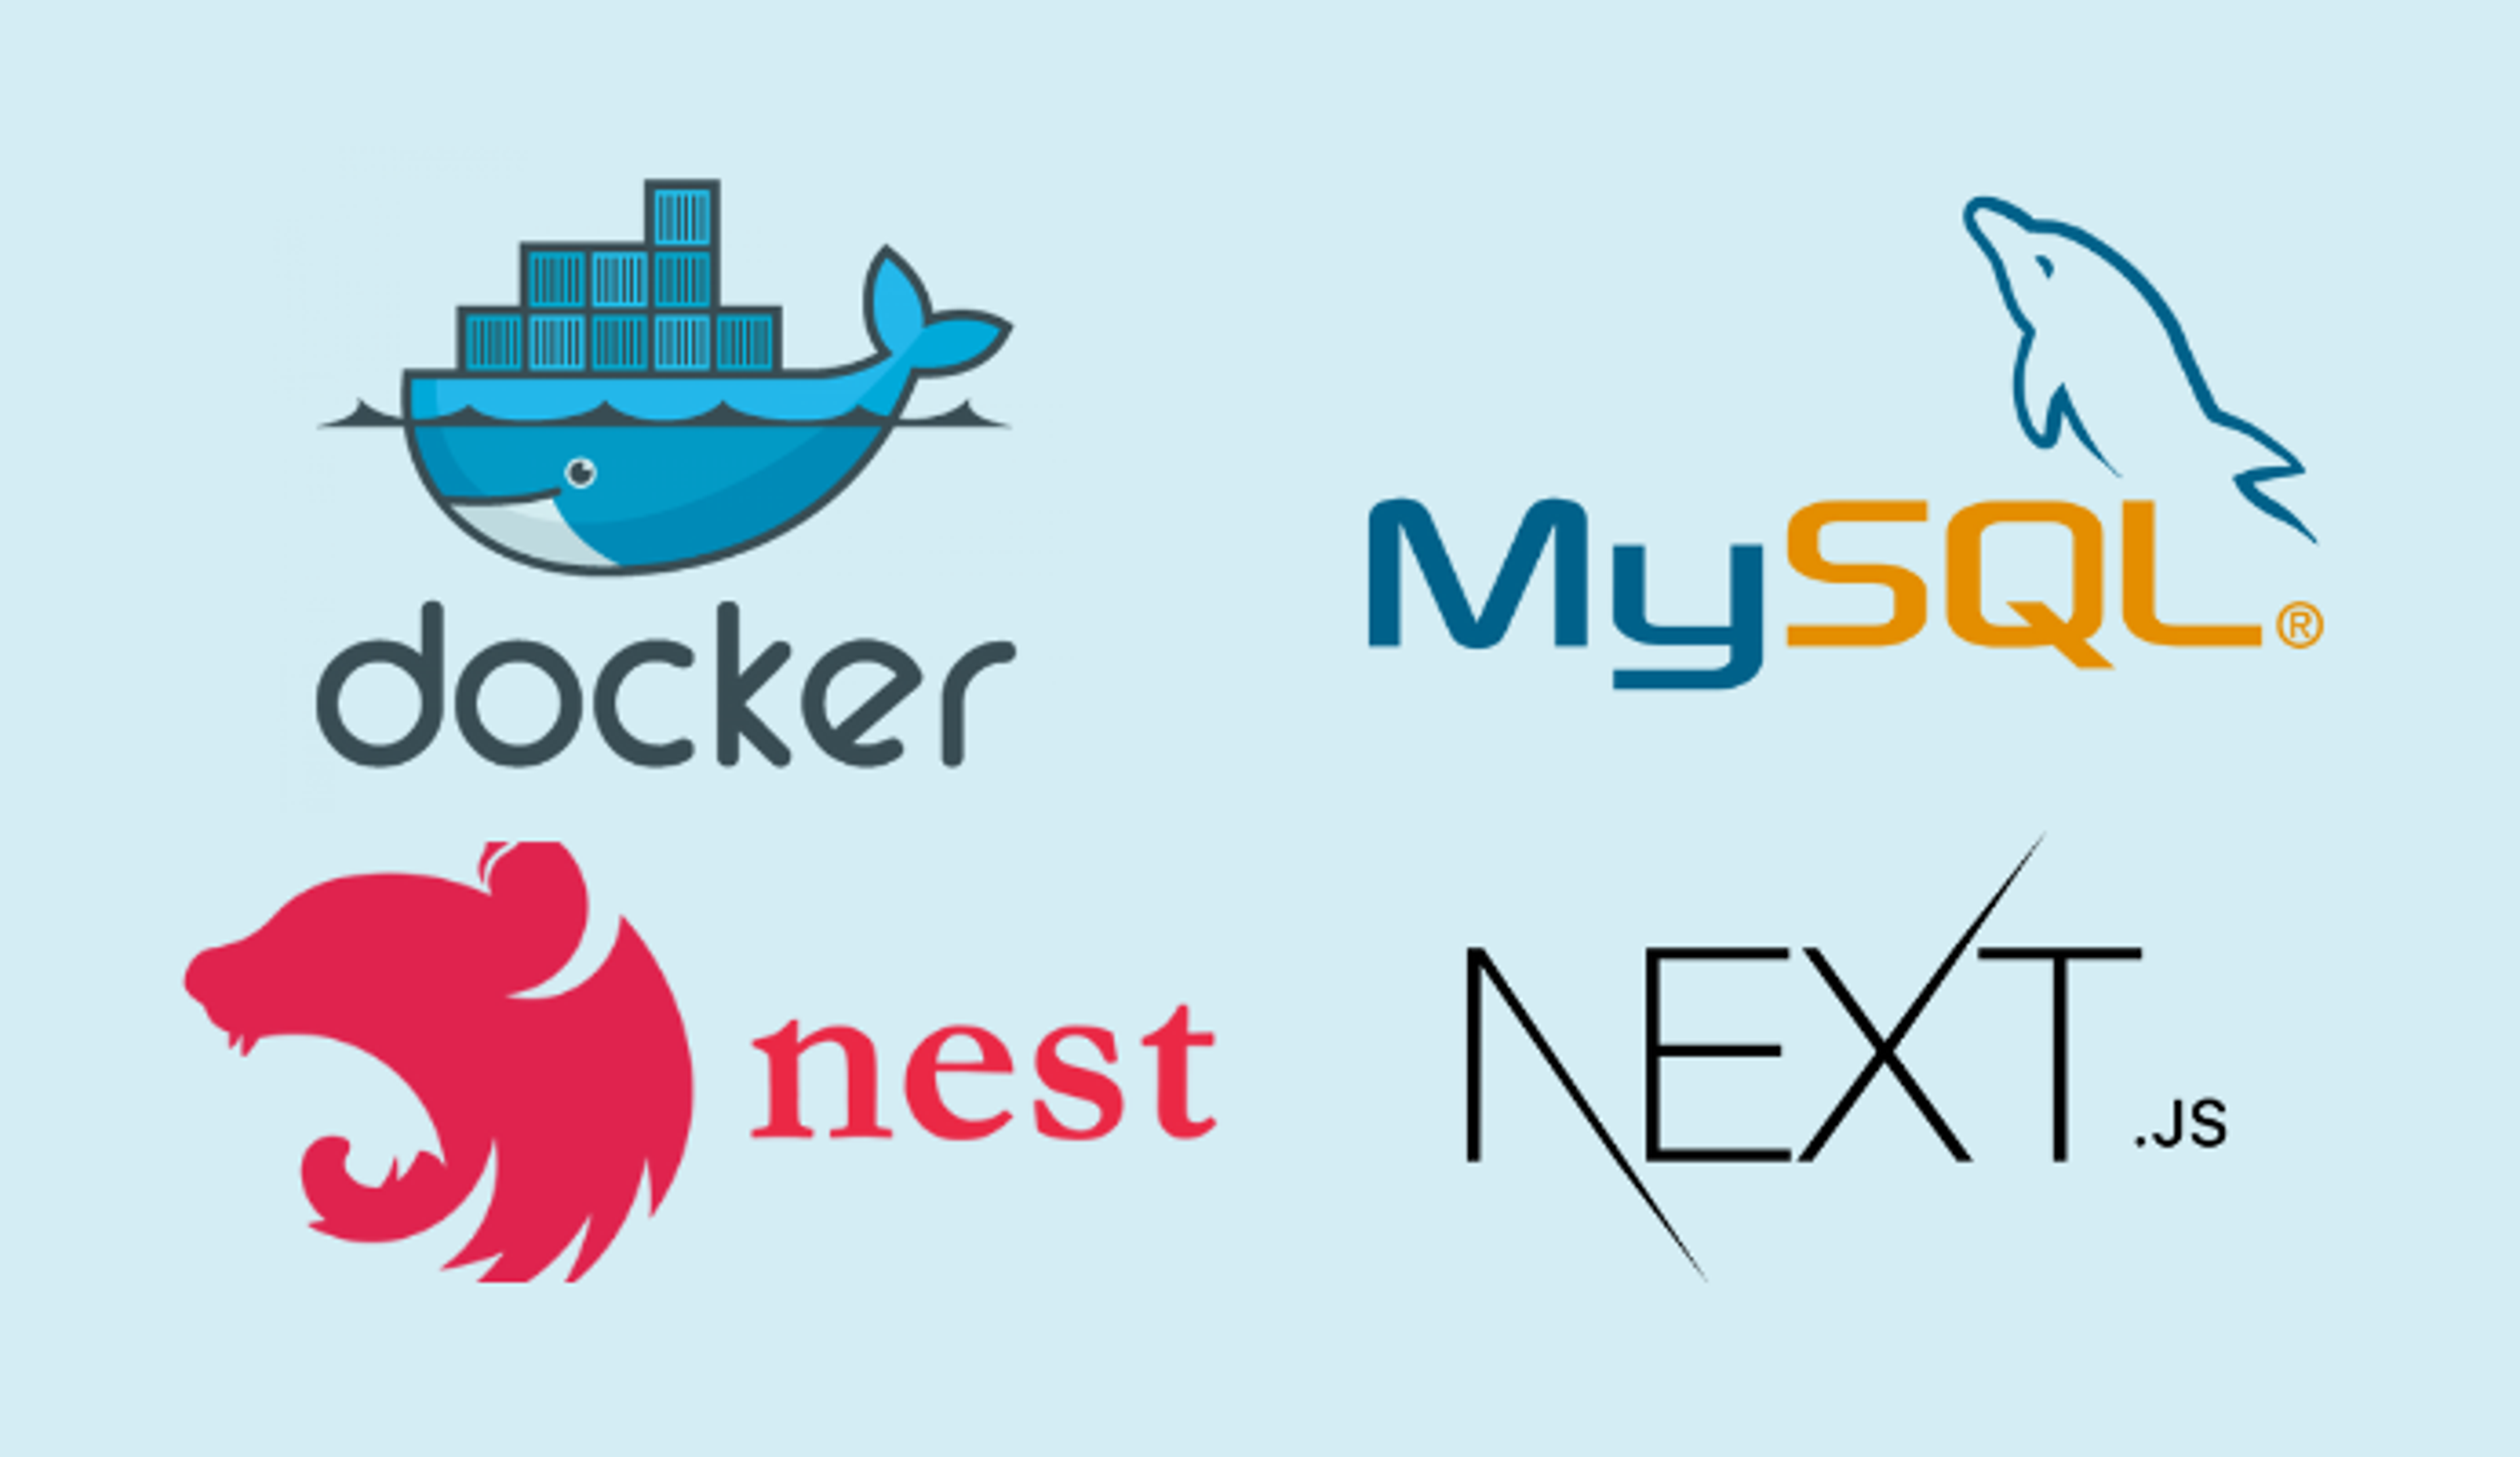 Docker, MySQL, NestJS and NextJS logos